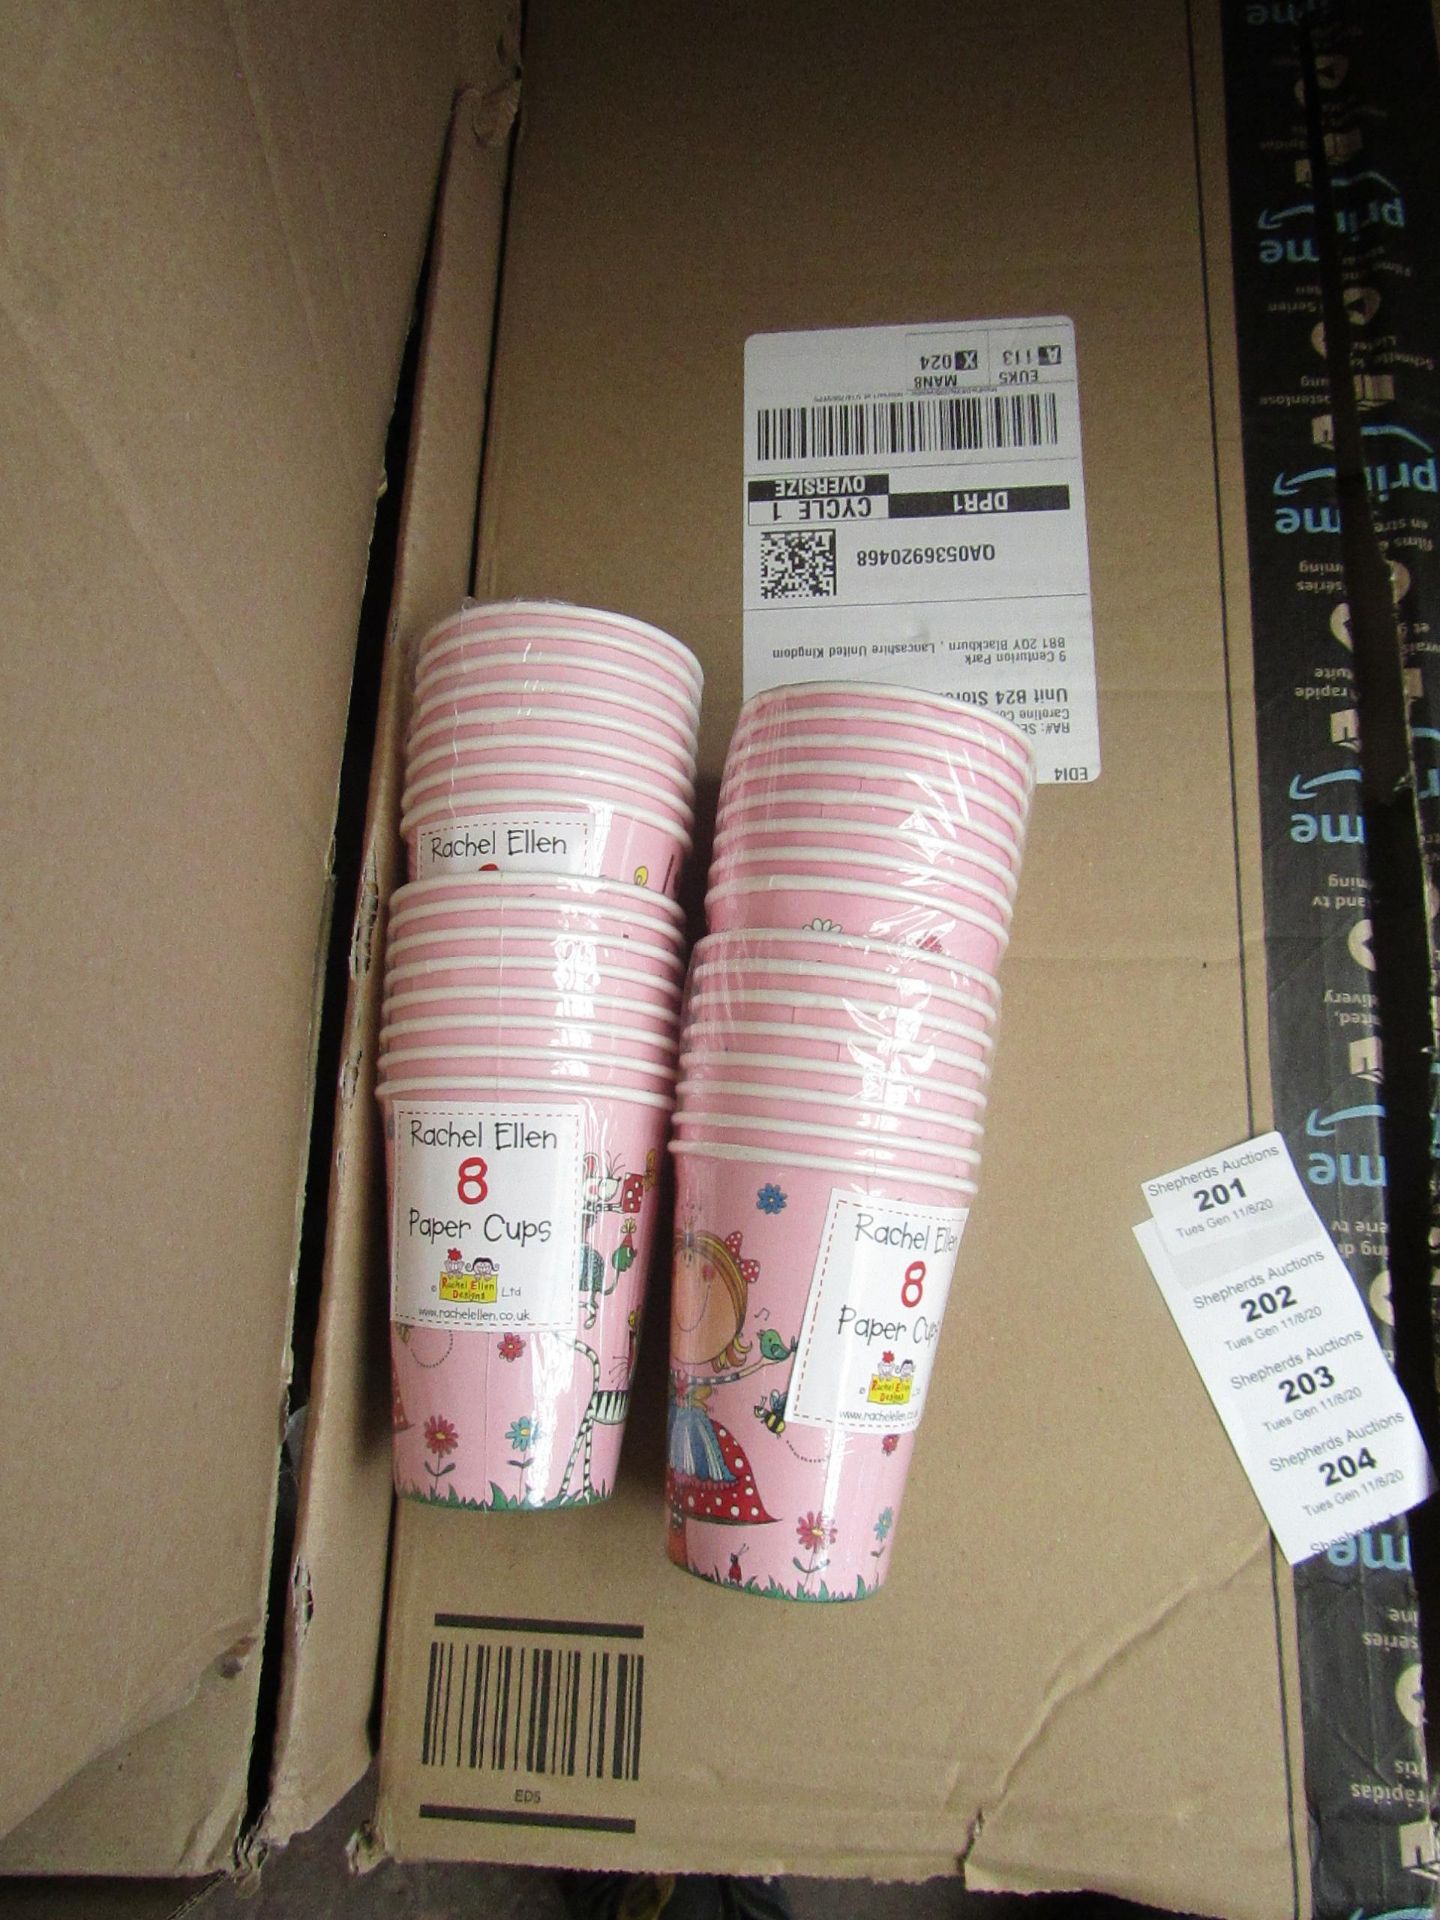 24x Rachel Ellen - Birthday Girl Paper Cups - All New & Sealed.